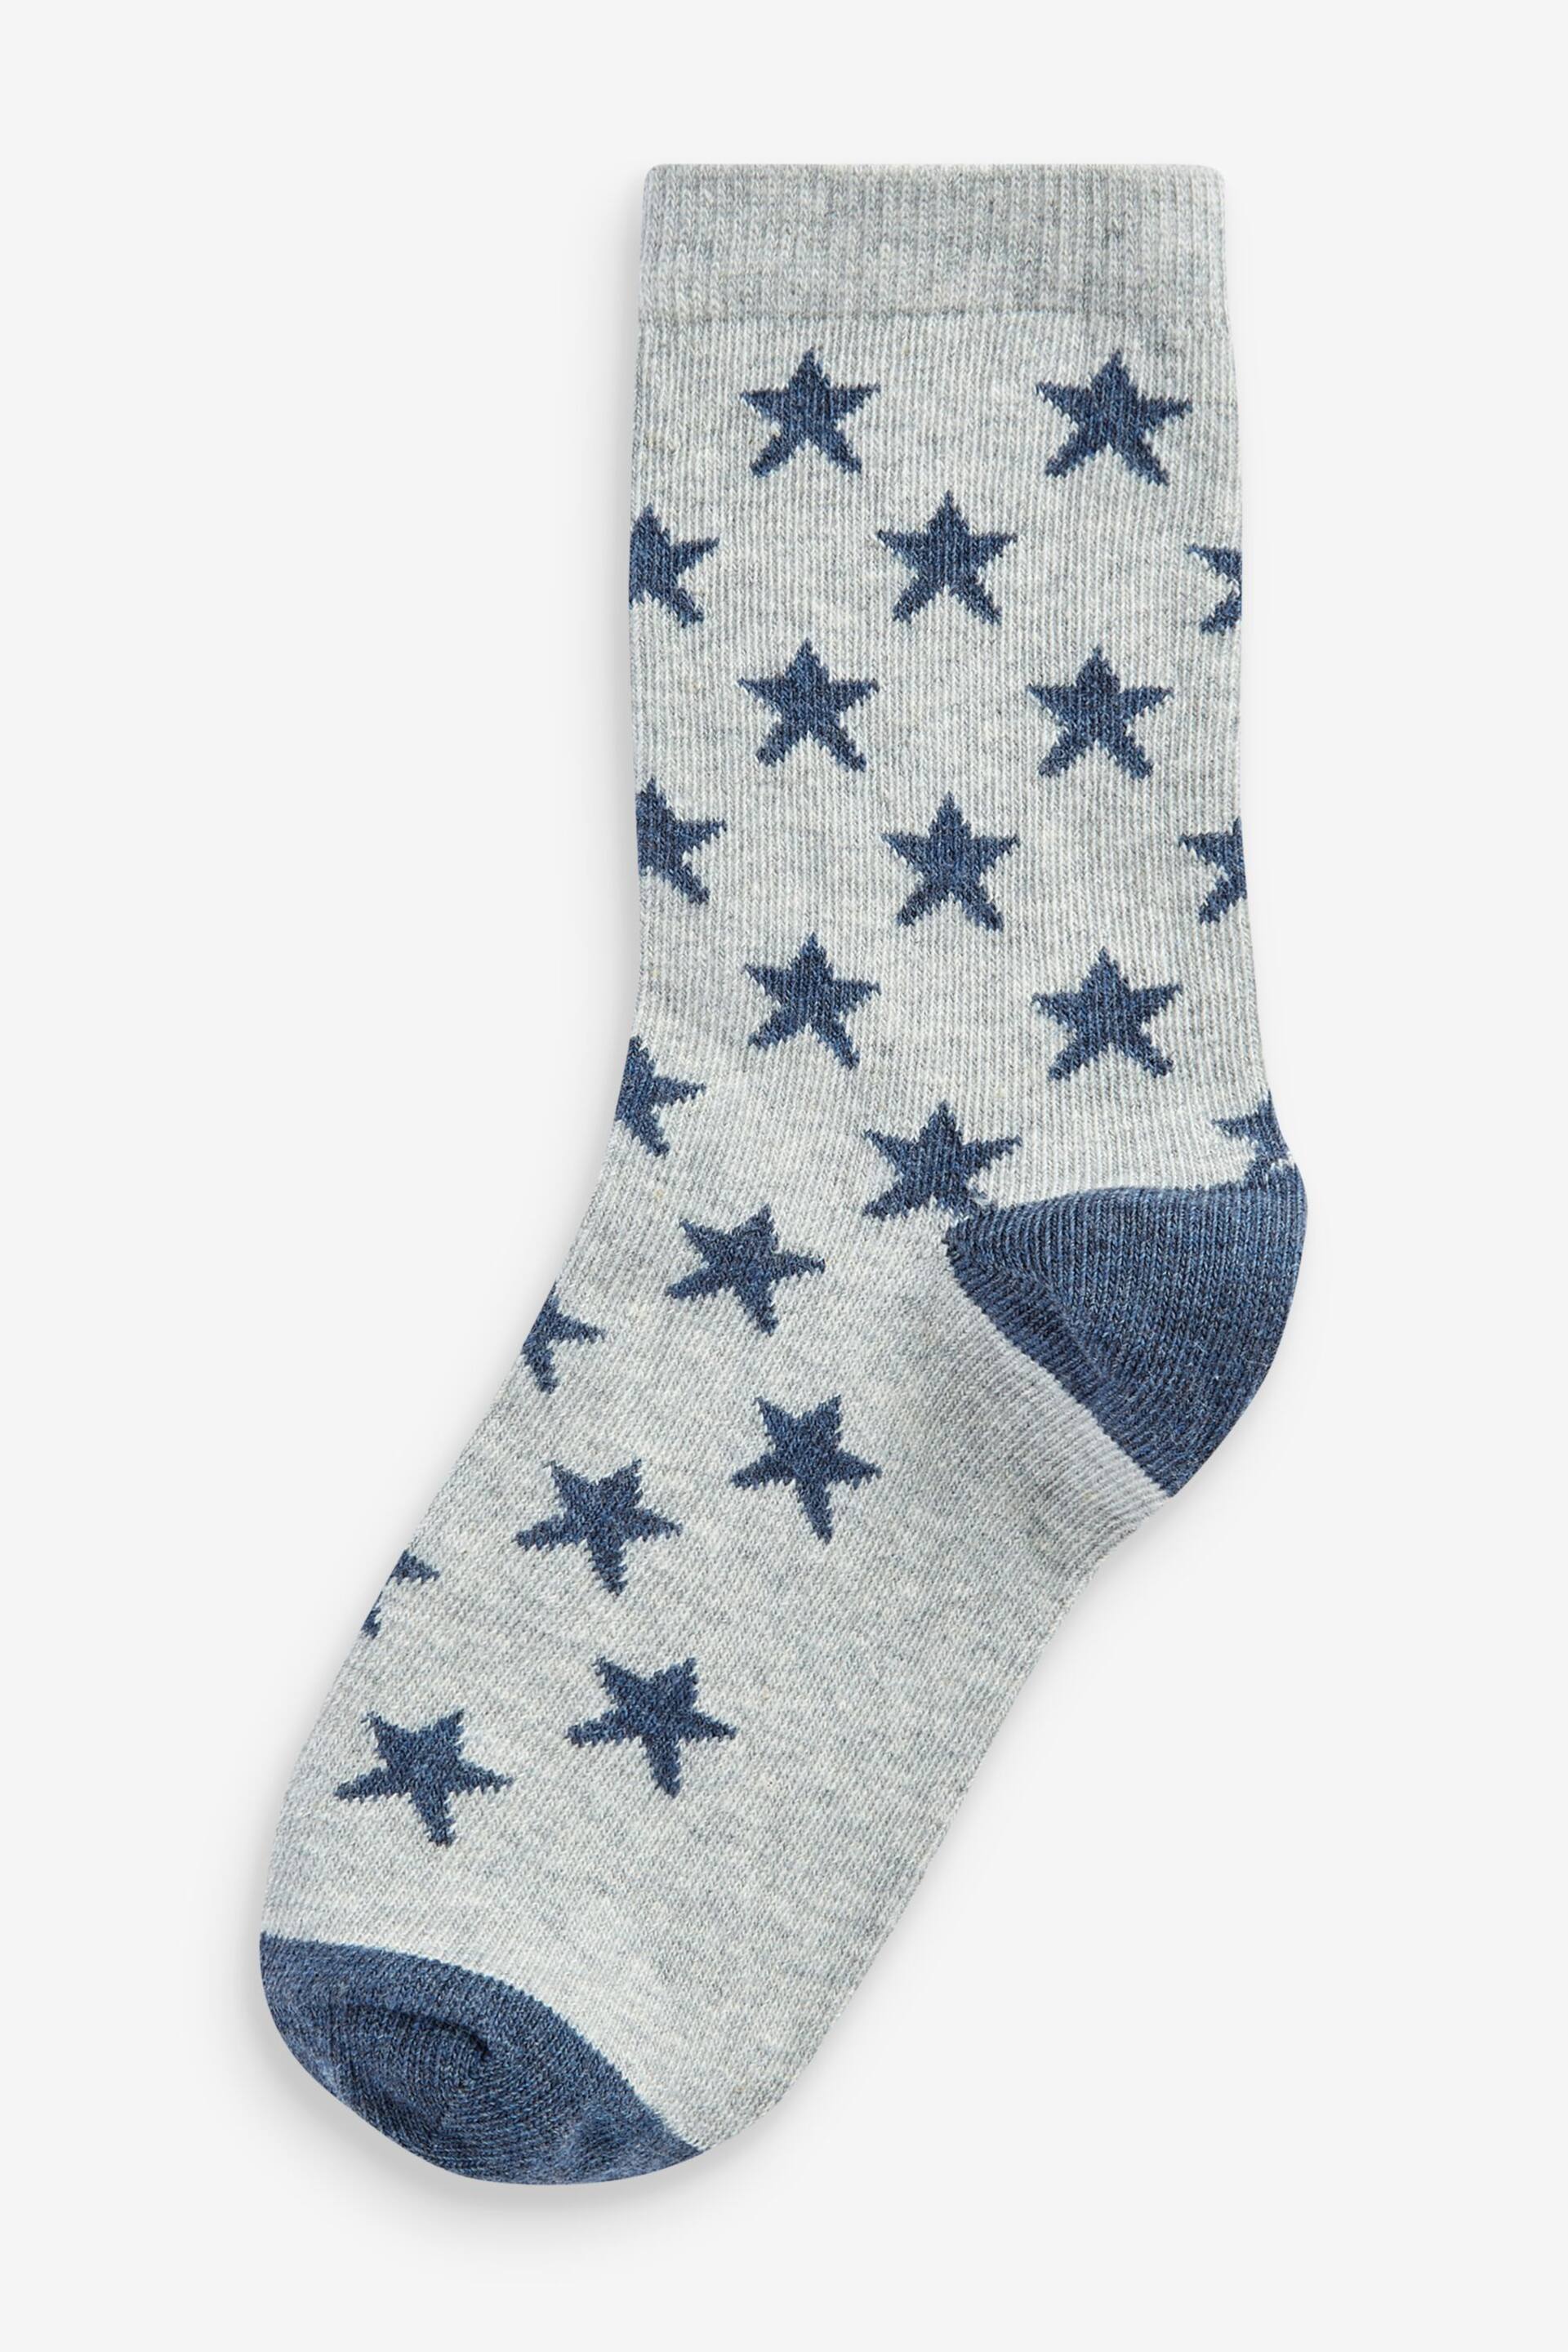 Blue Stars Cotton Rich Socks 7 Pack - Image 6 of 9